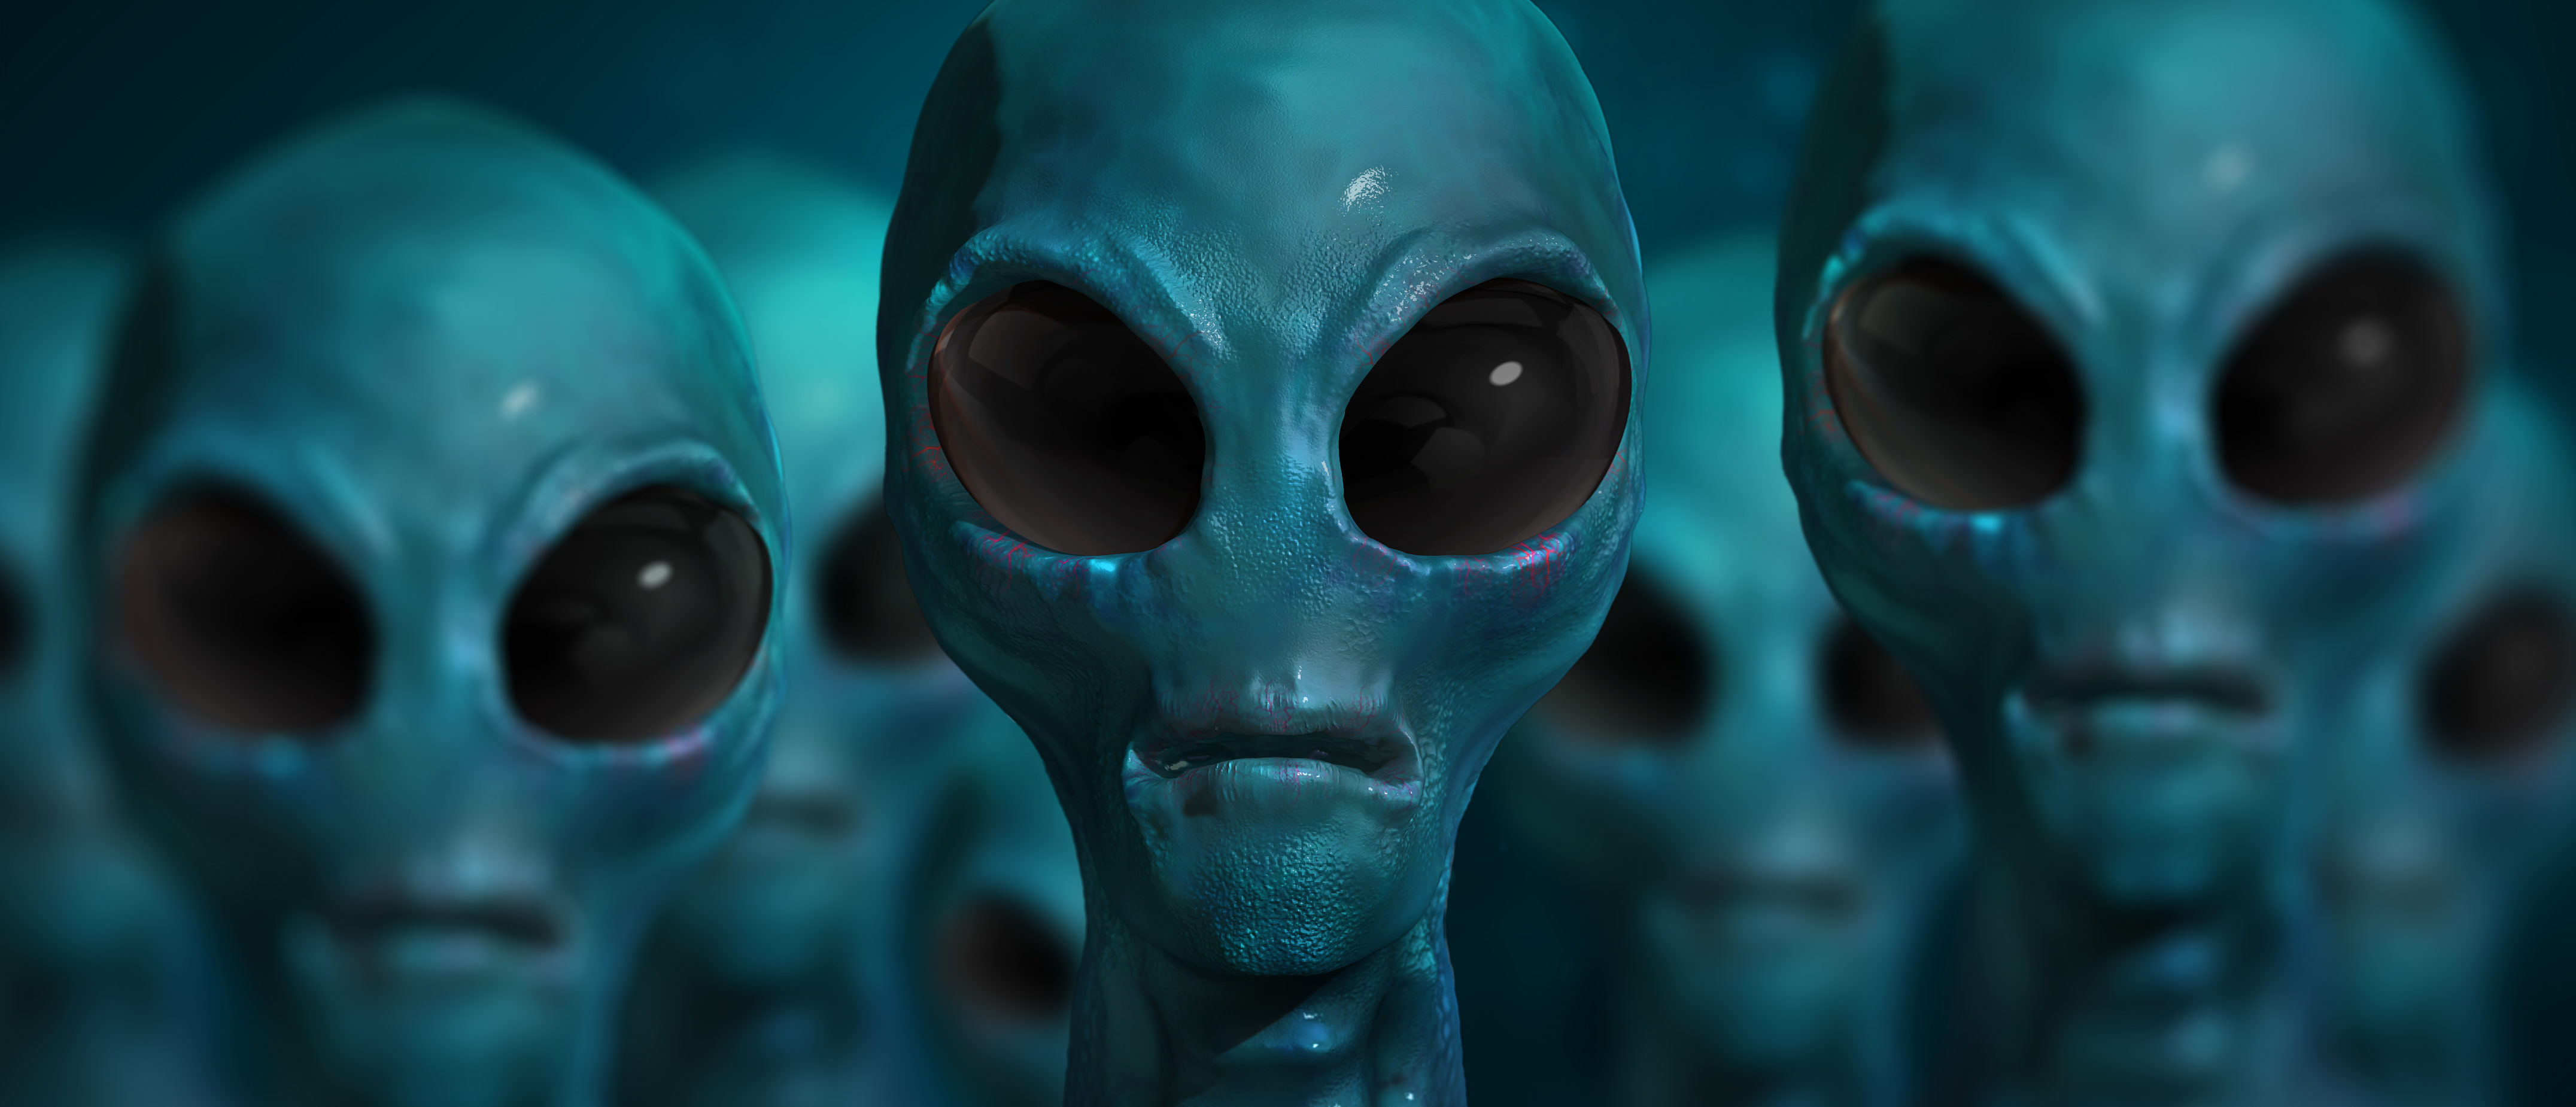 Aliens Source: Andrii Vodolazhskyi/Shutterstock